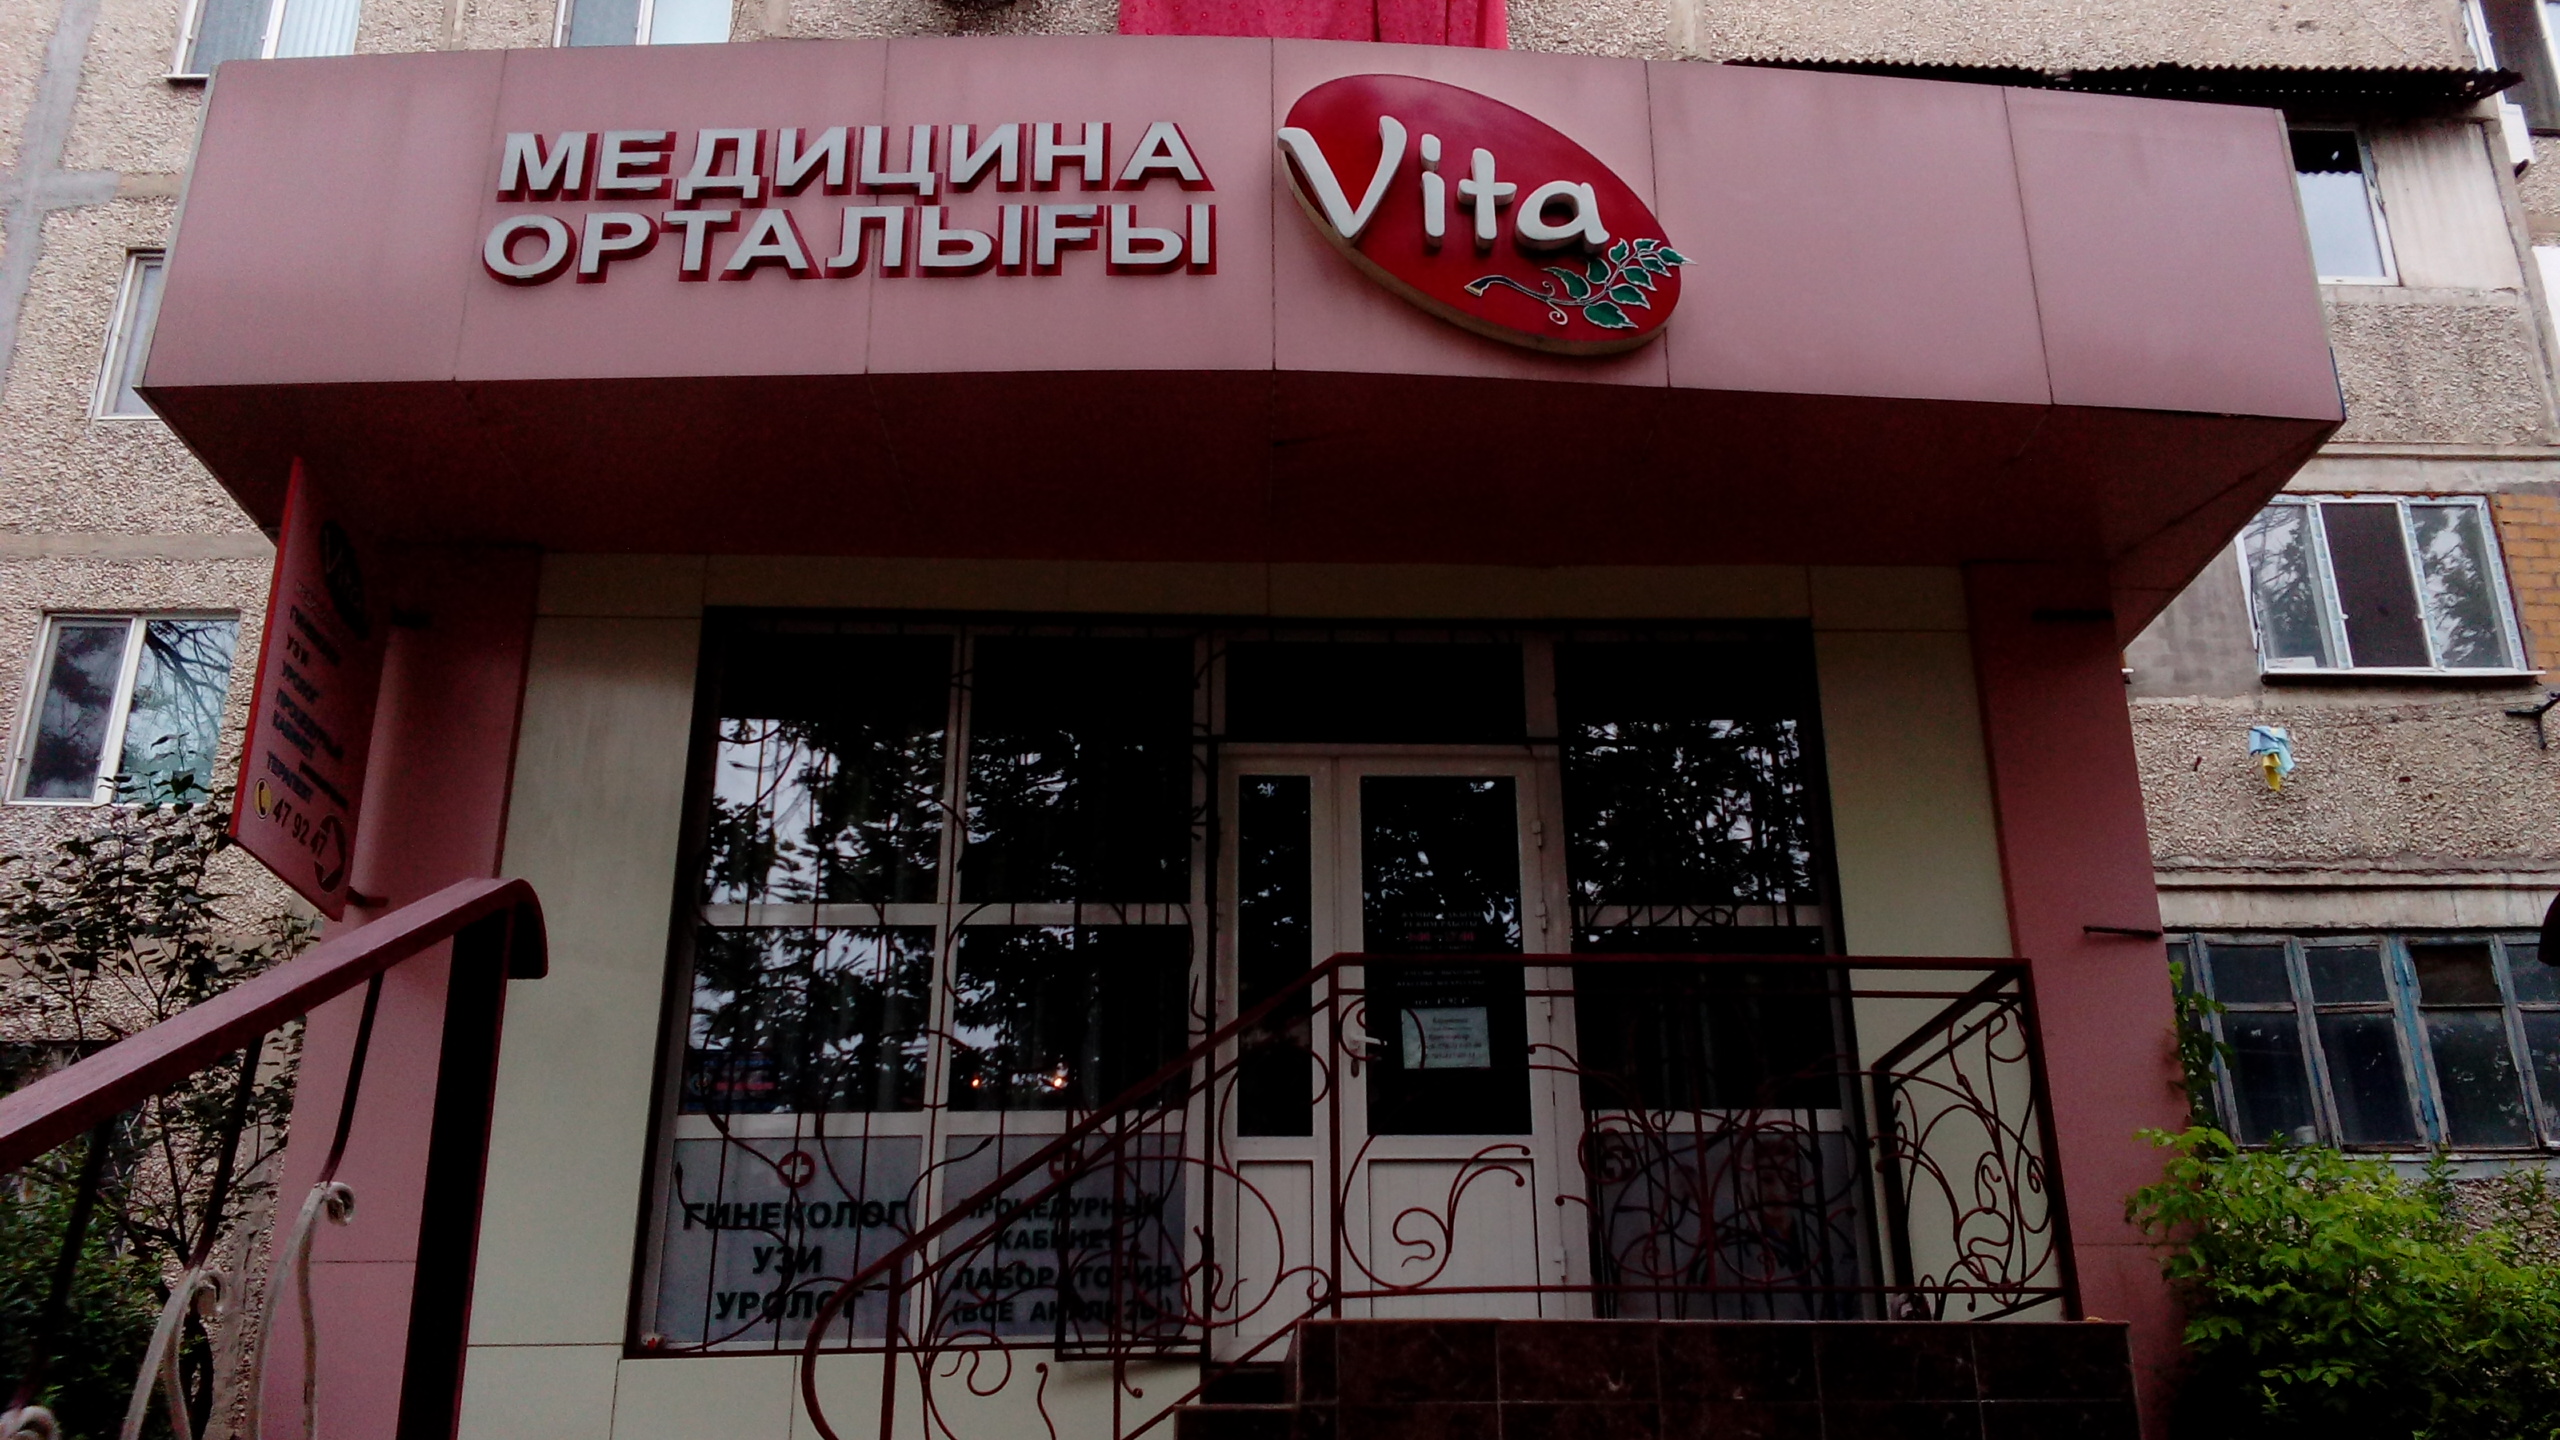 Медицинский центр "VITA"